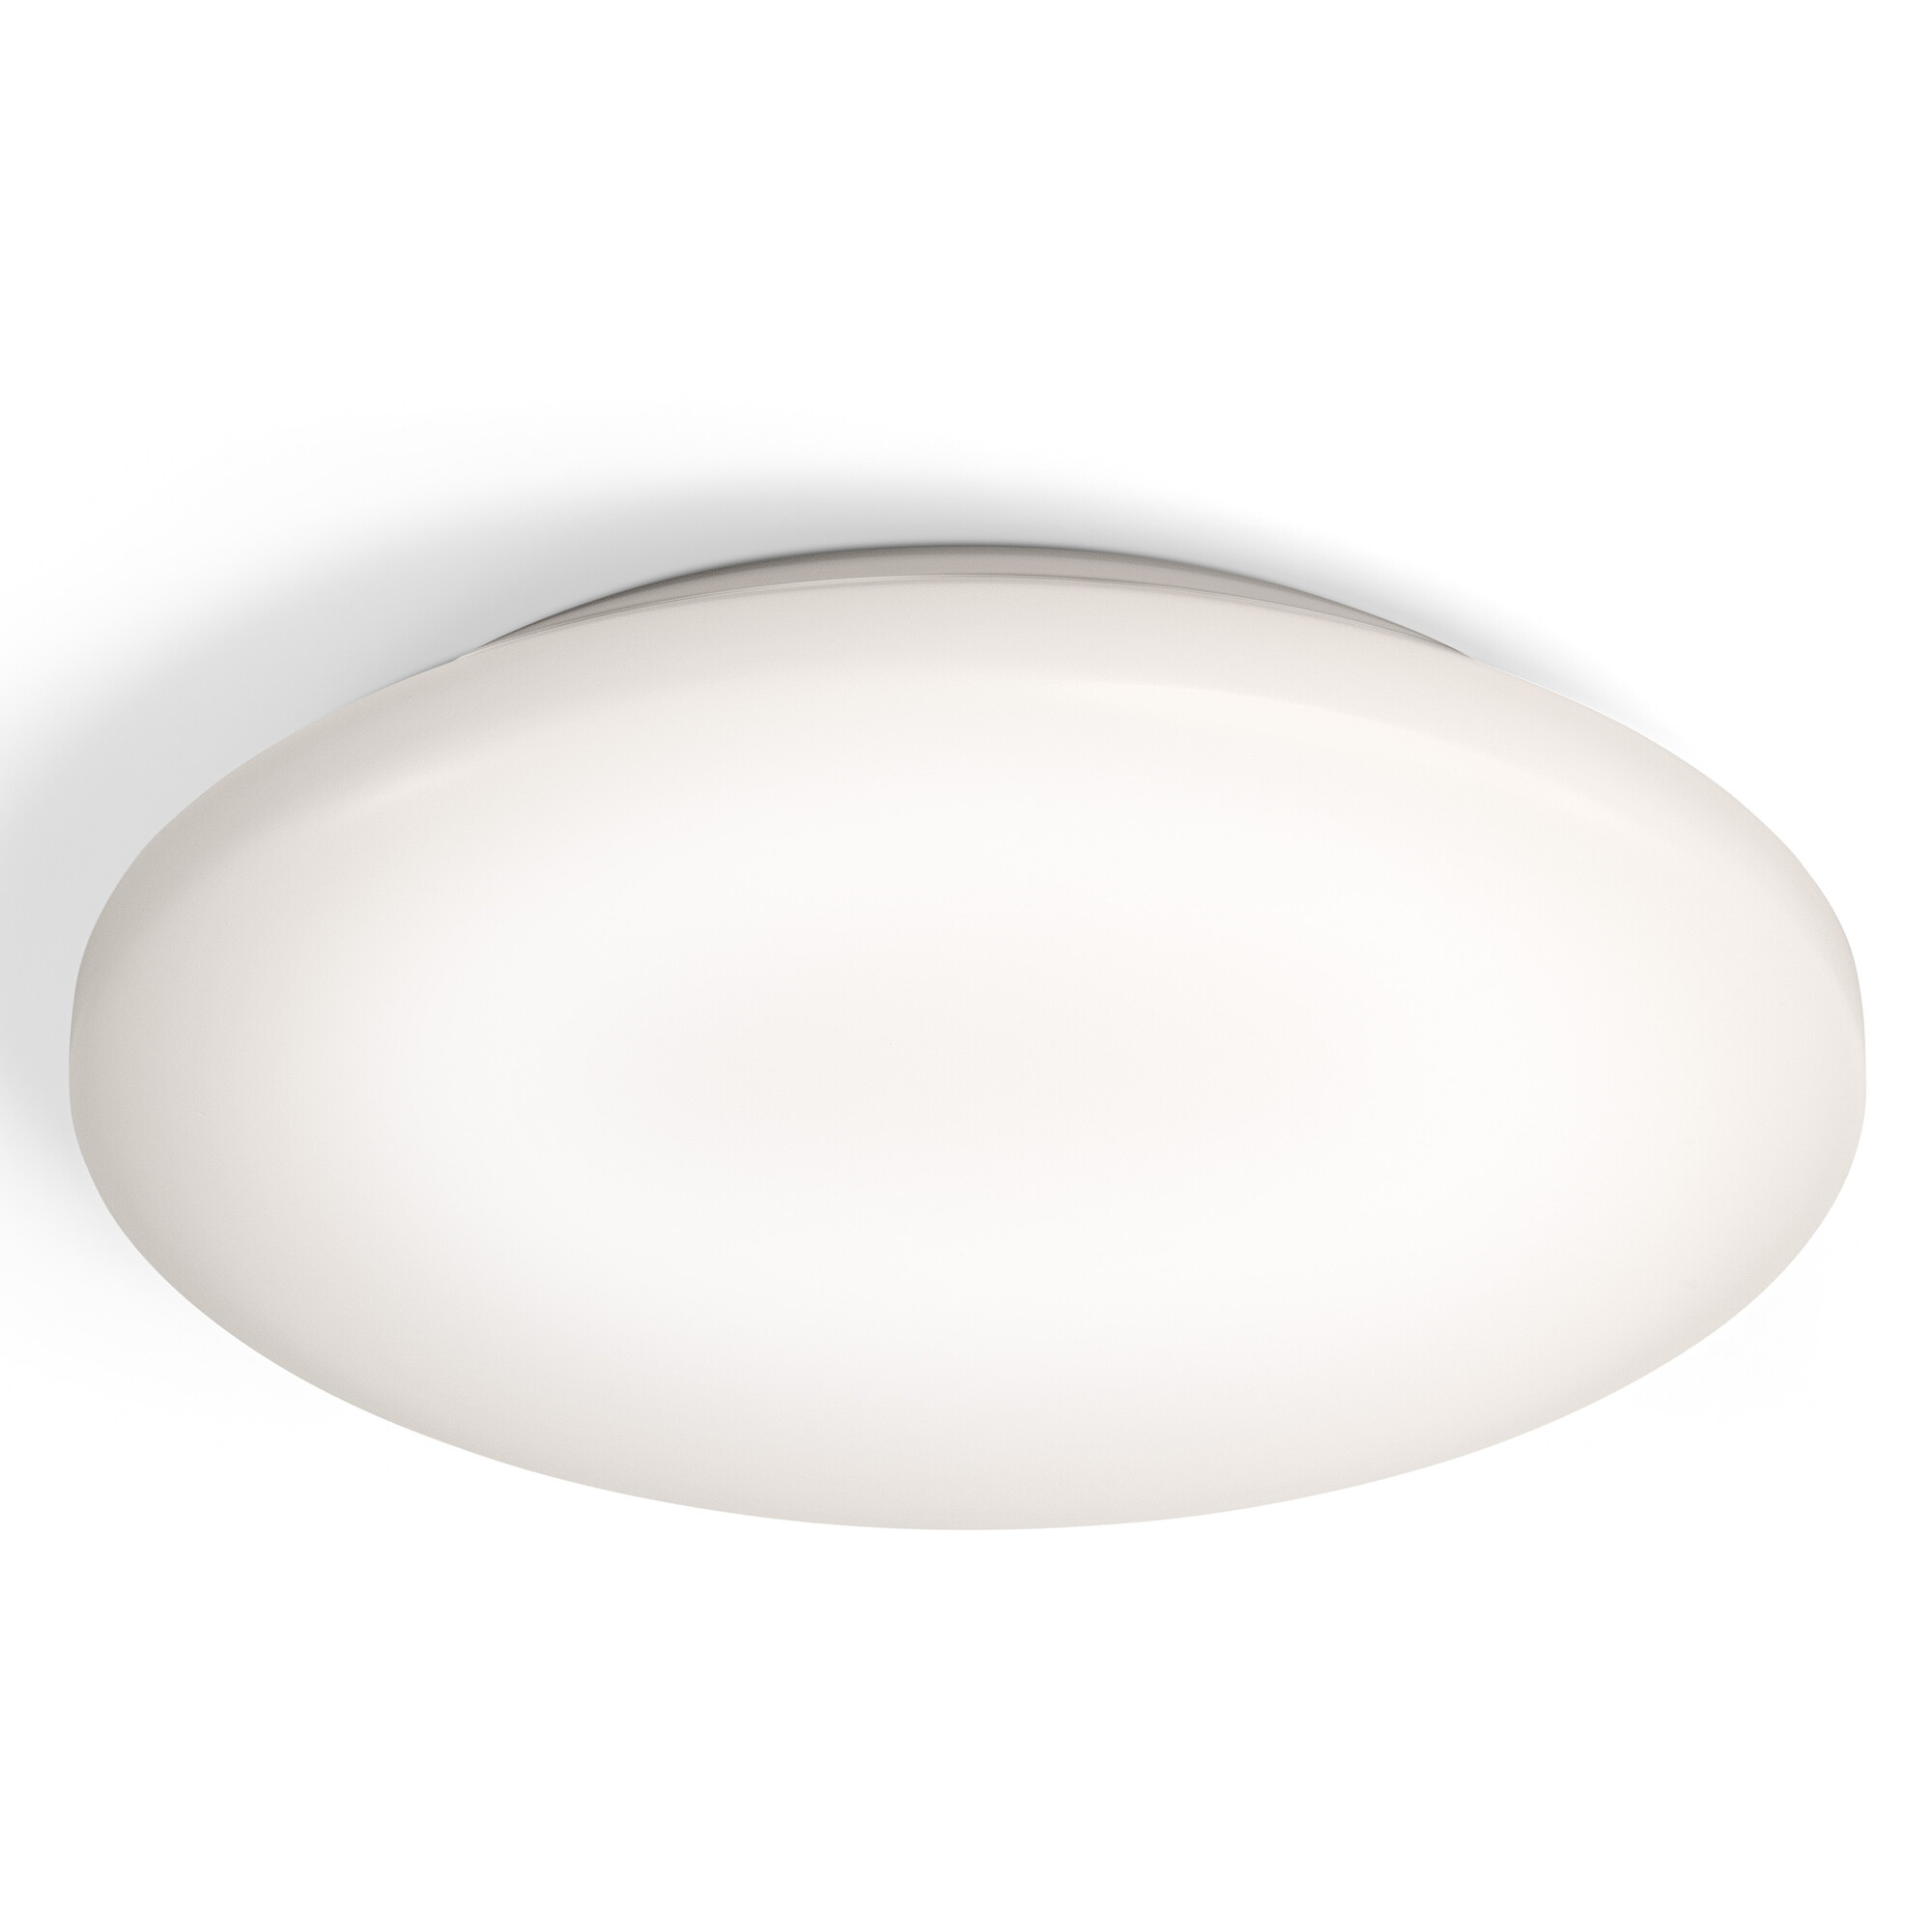 LED-Deckenleuchte 'Orbis Pure' weiß Ø 40 cm 1800 lm + product picture